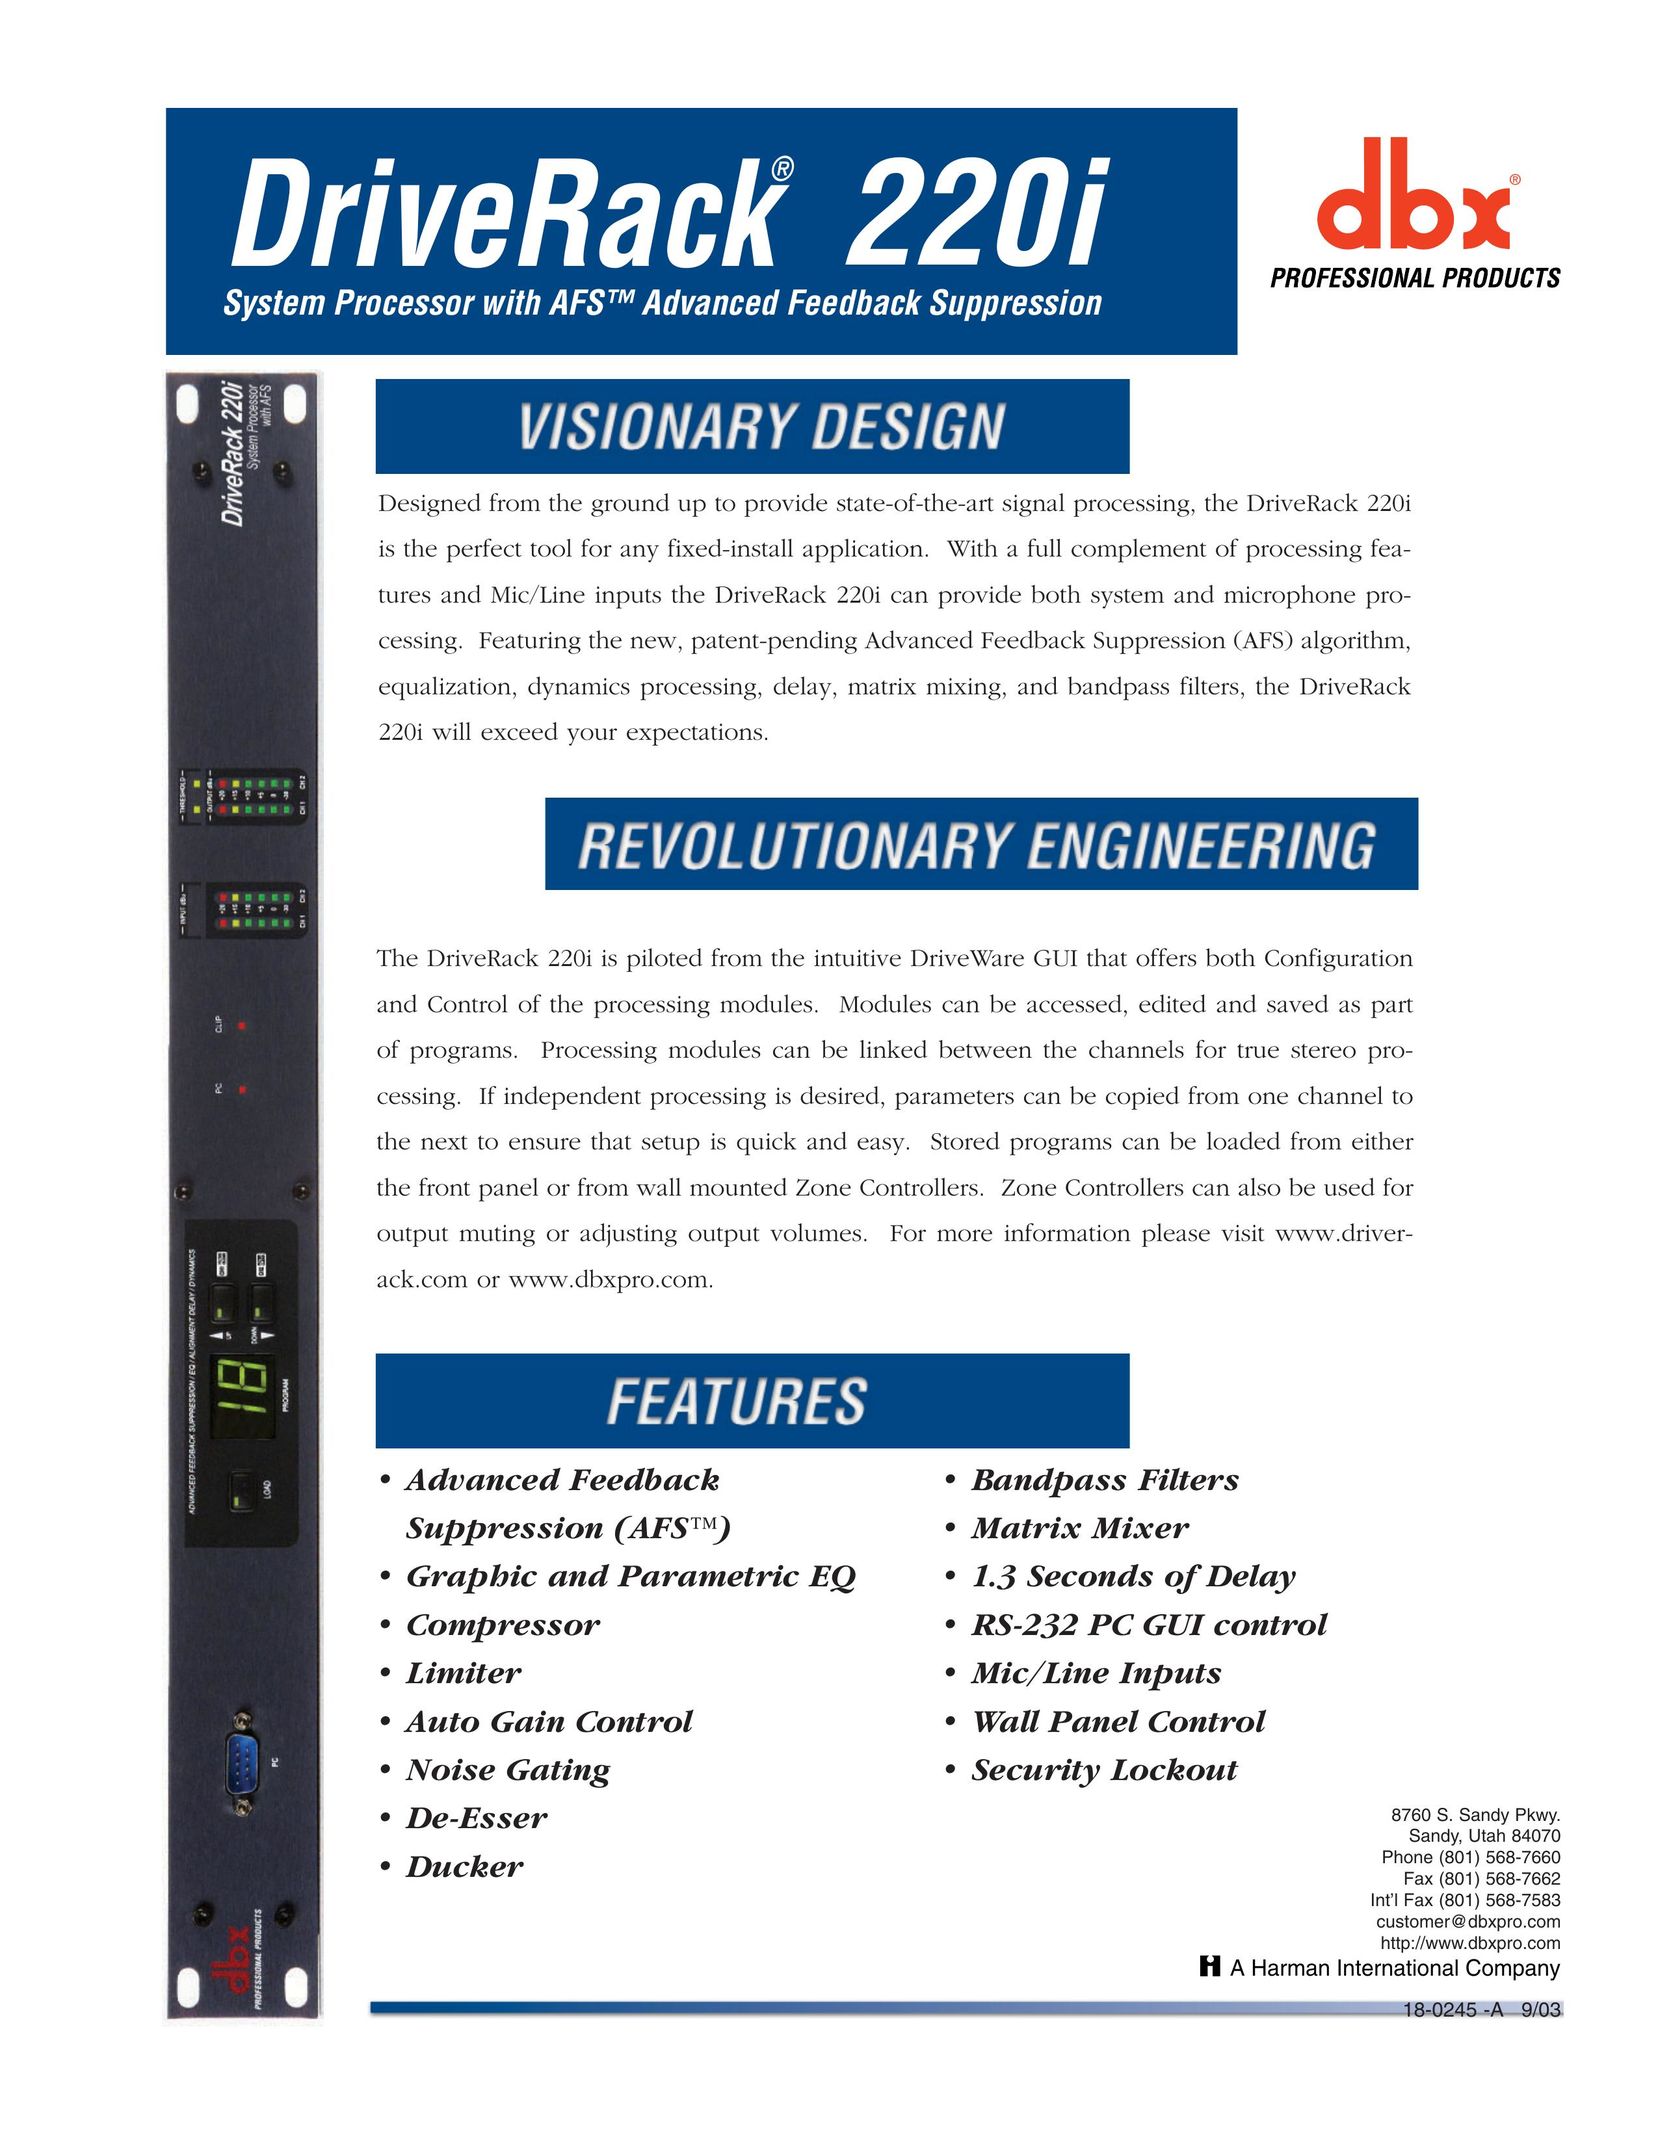 dbx Pro 220i Welding System User Manual